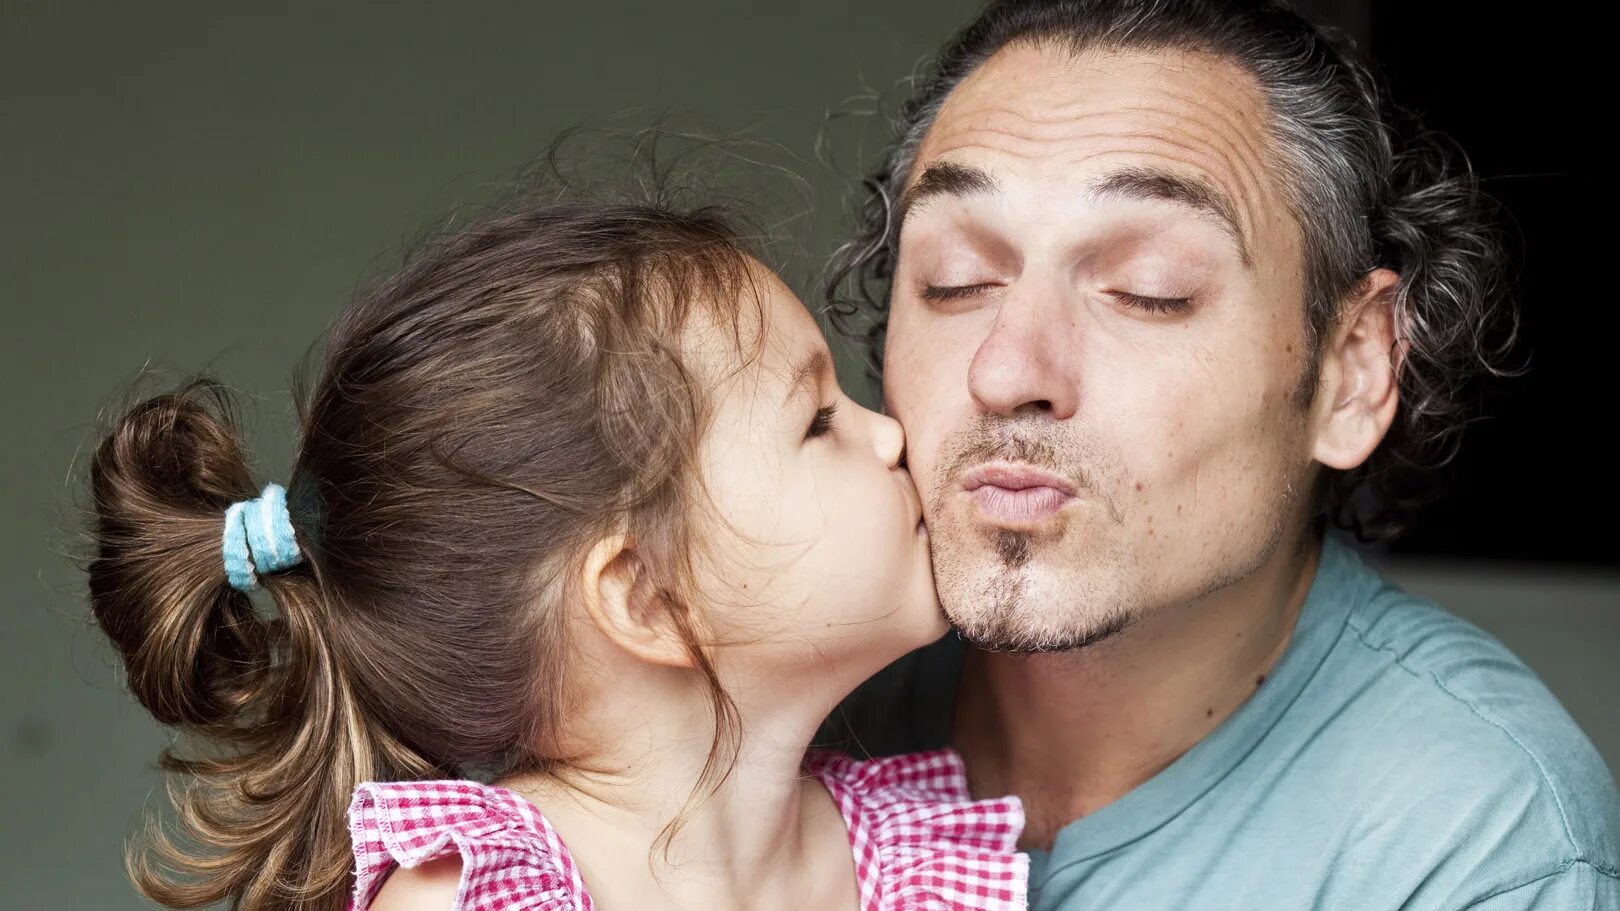 Real daddy daughter. Поцелуй отца. Папа целует дочку. Целует папу. Дочь целует папу.